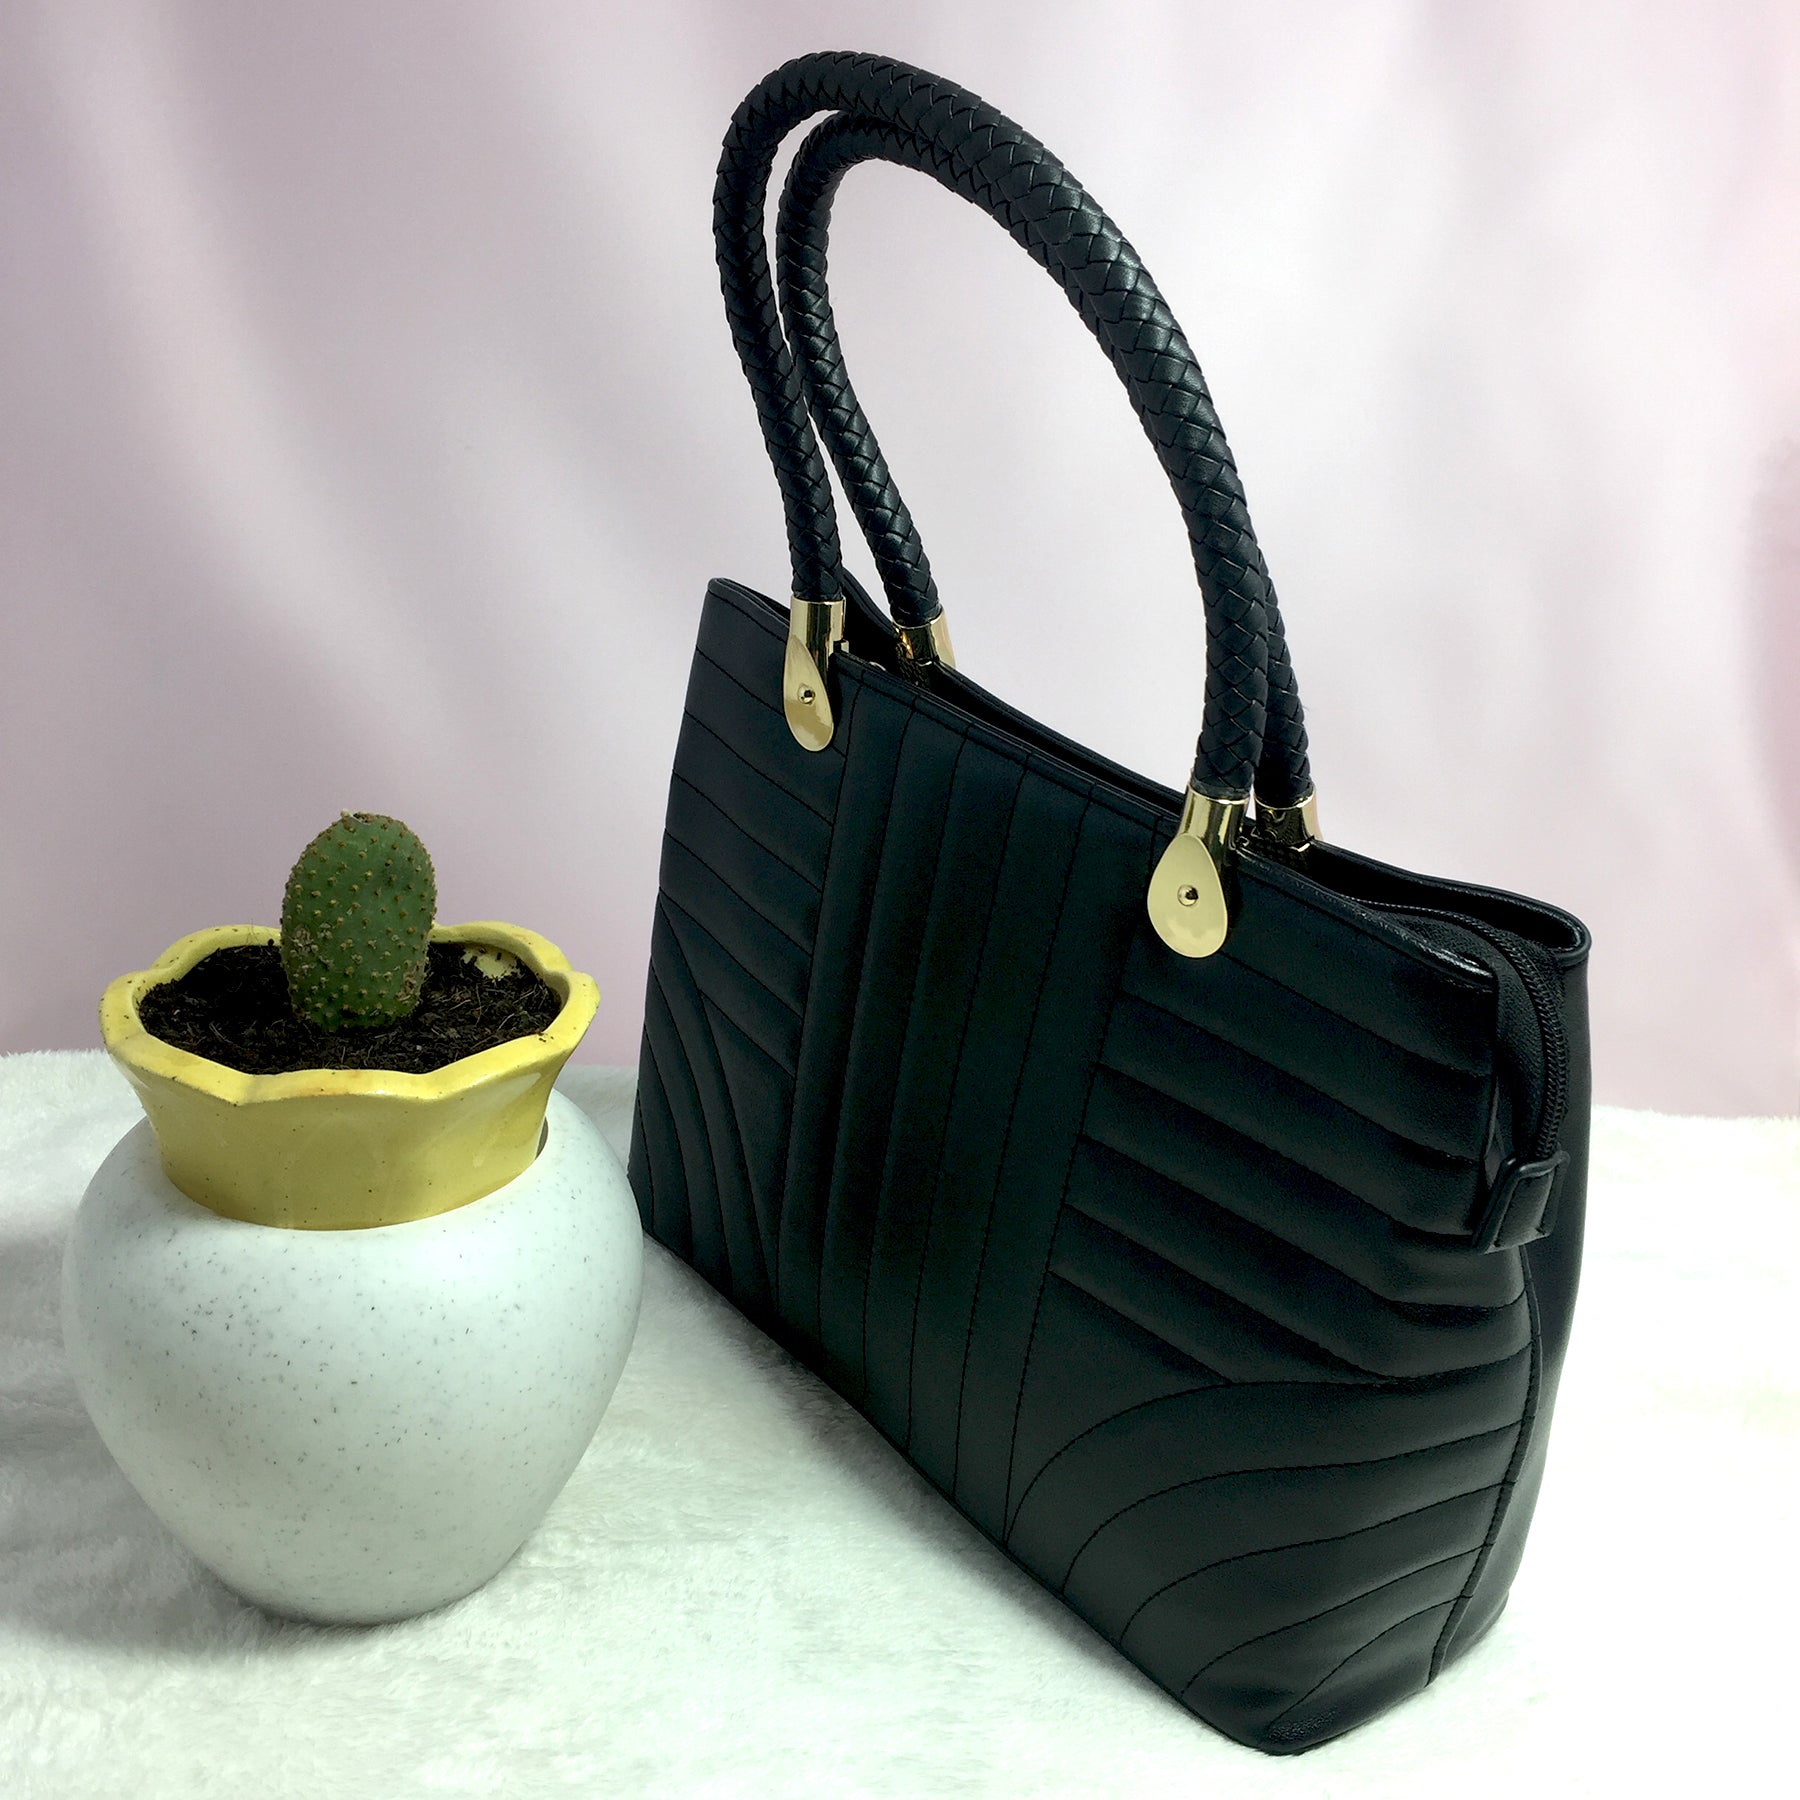 Ficuster Black Faux Leather Handbag